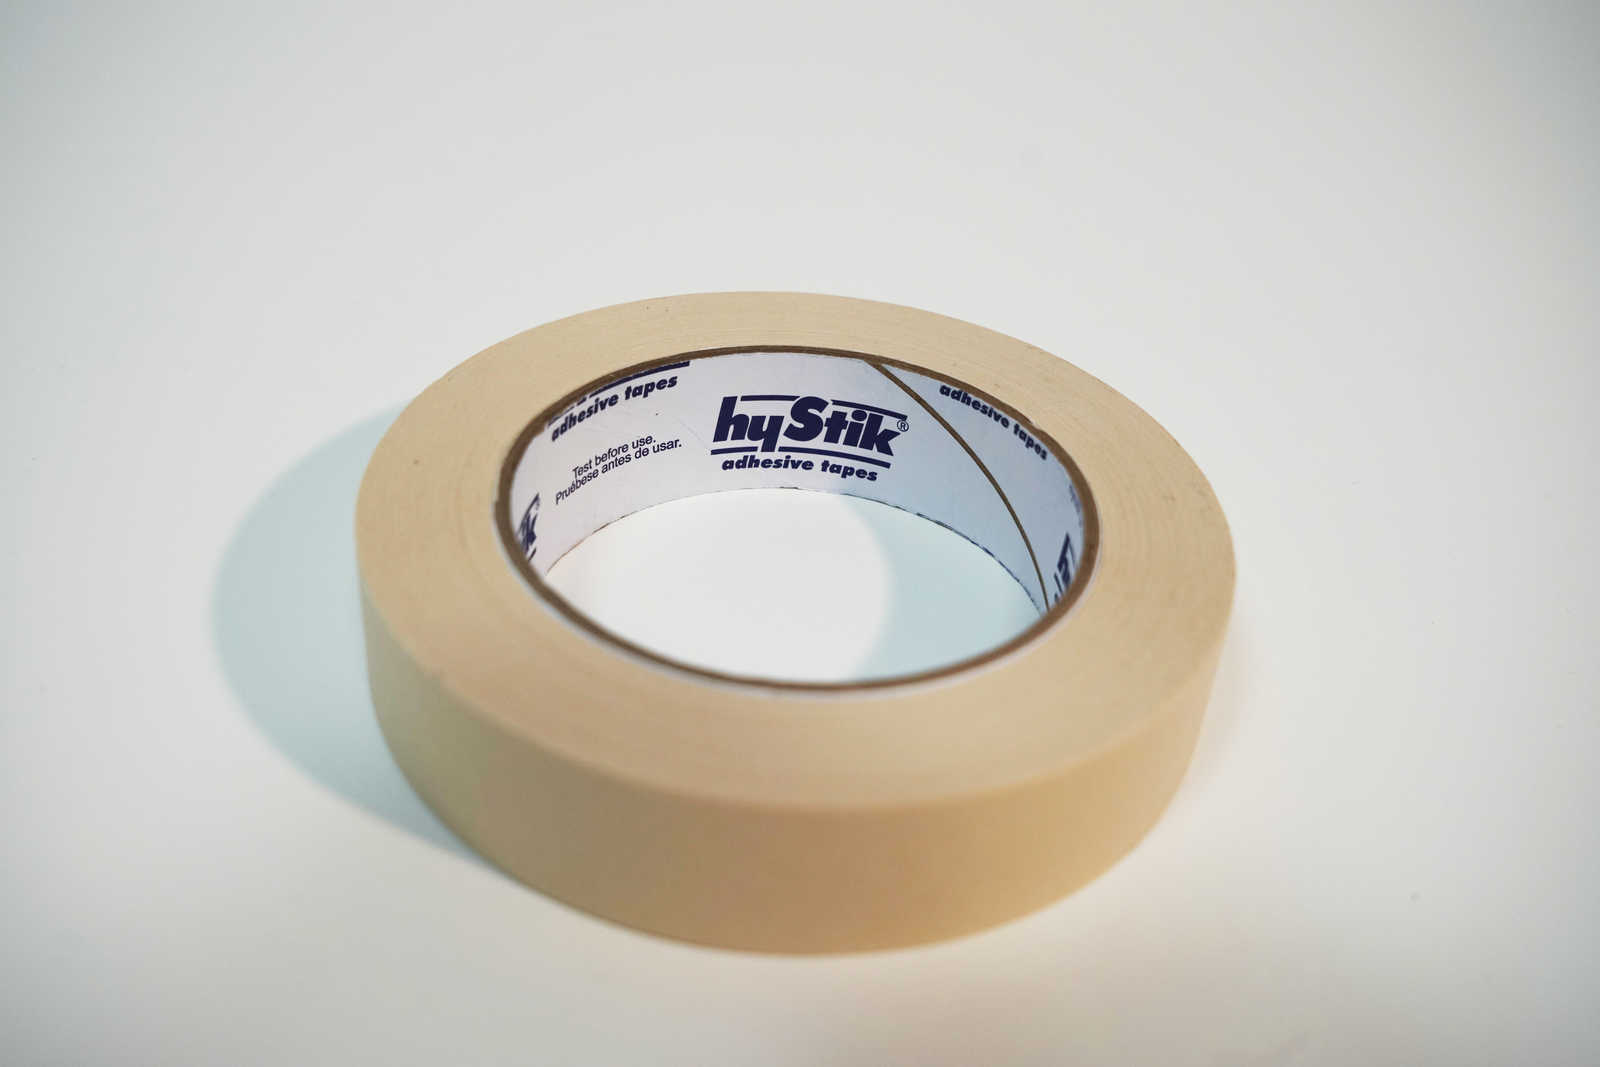             Crepe tape 25mm x 50m in crème
        